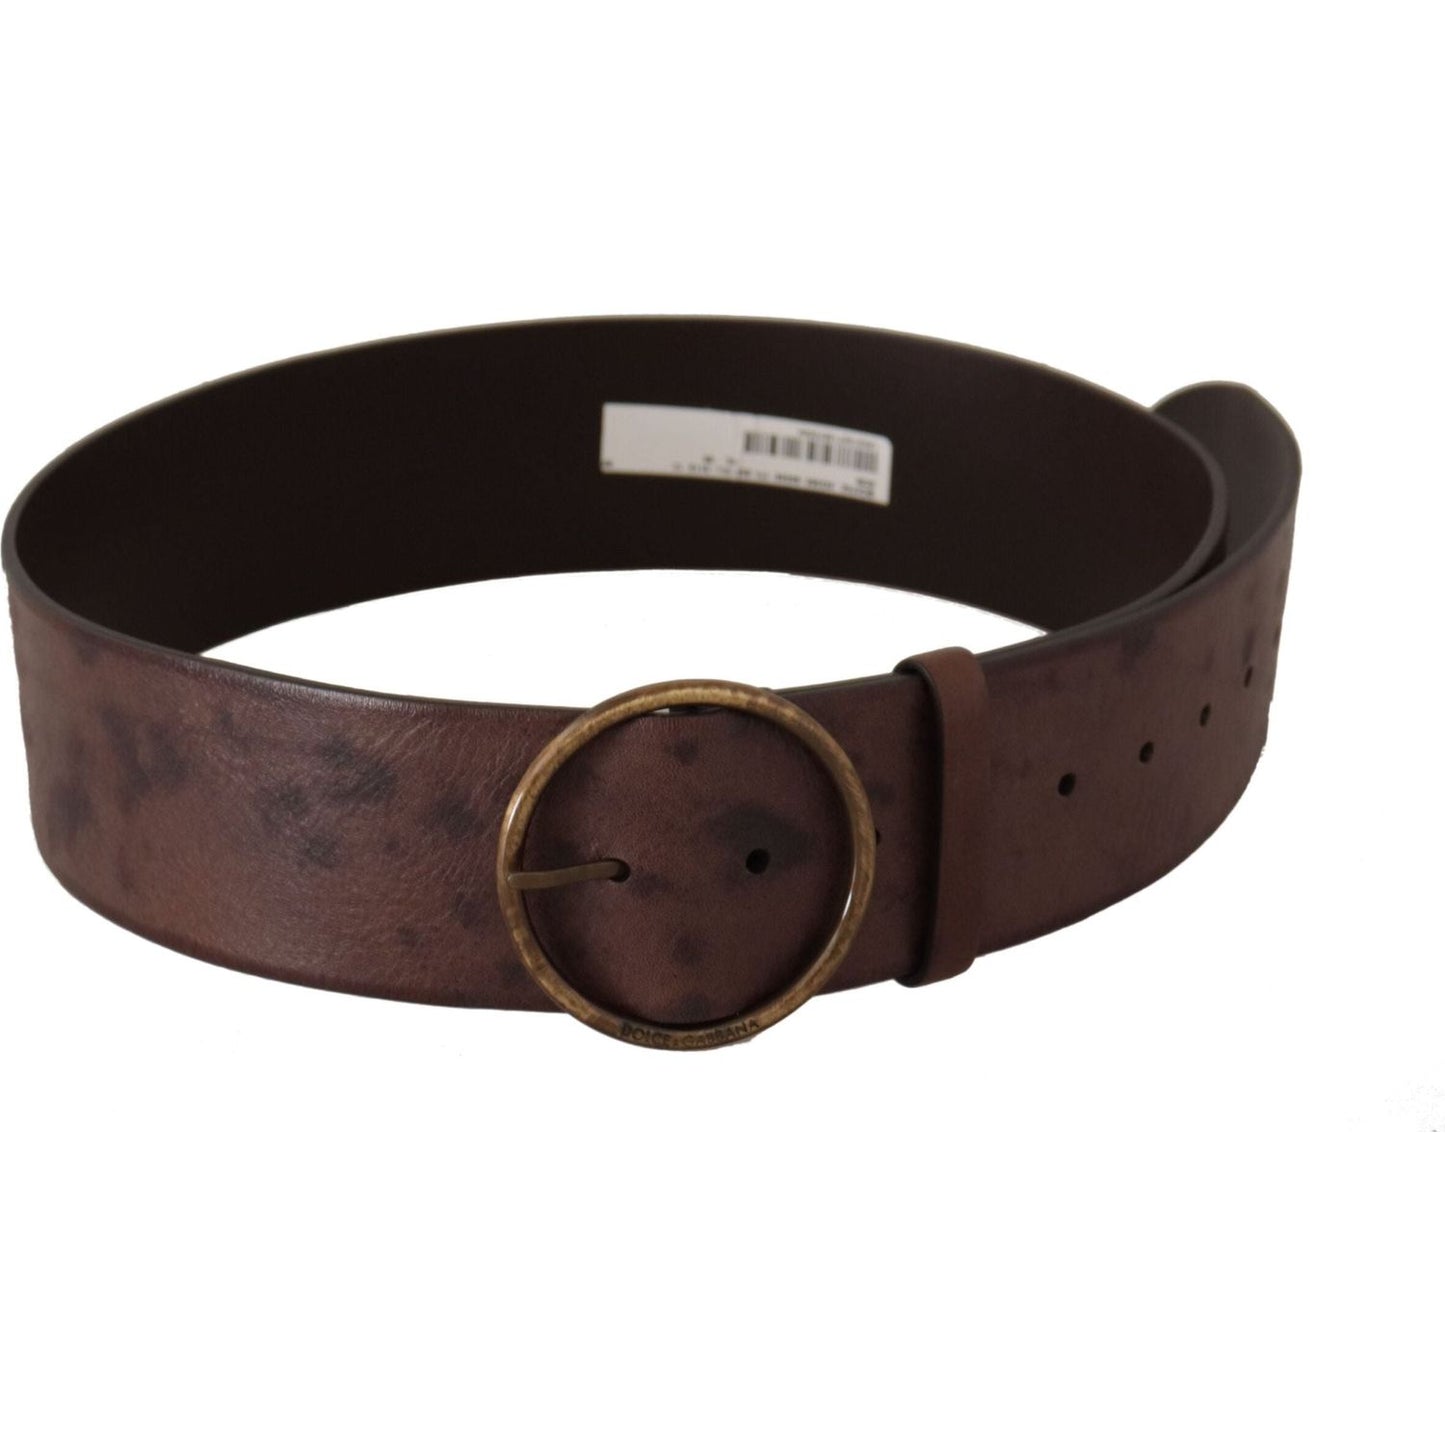 Dolce & Gabbana Elegant Dark Brown Leather Belt with Logo Buckle dark-brown-wide-calf-leather-logo-round-buckle-belt IMG_9750-1-scaled-8a2d38a2-491.jpg